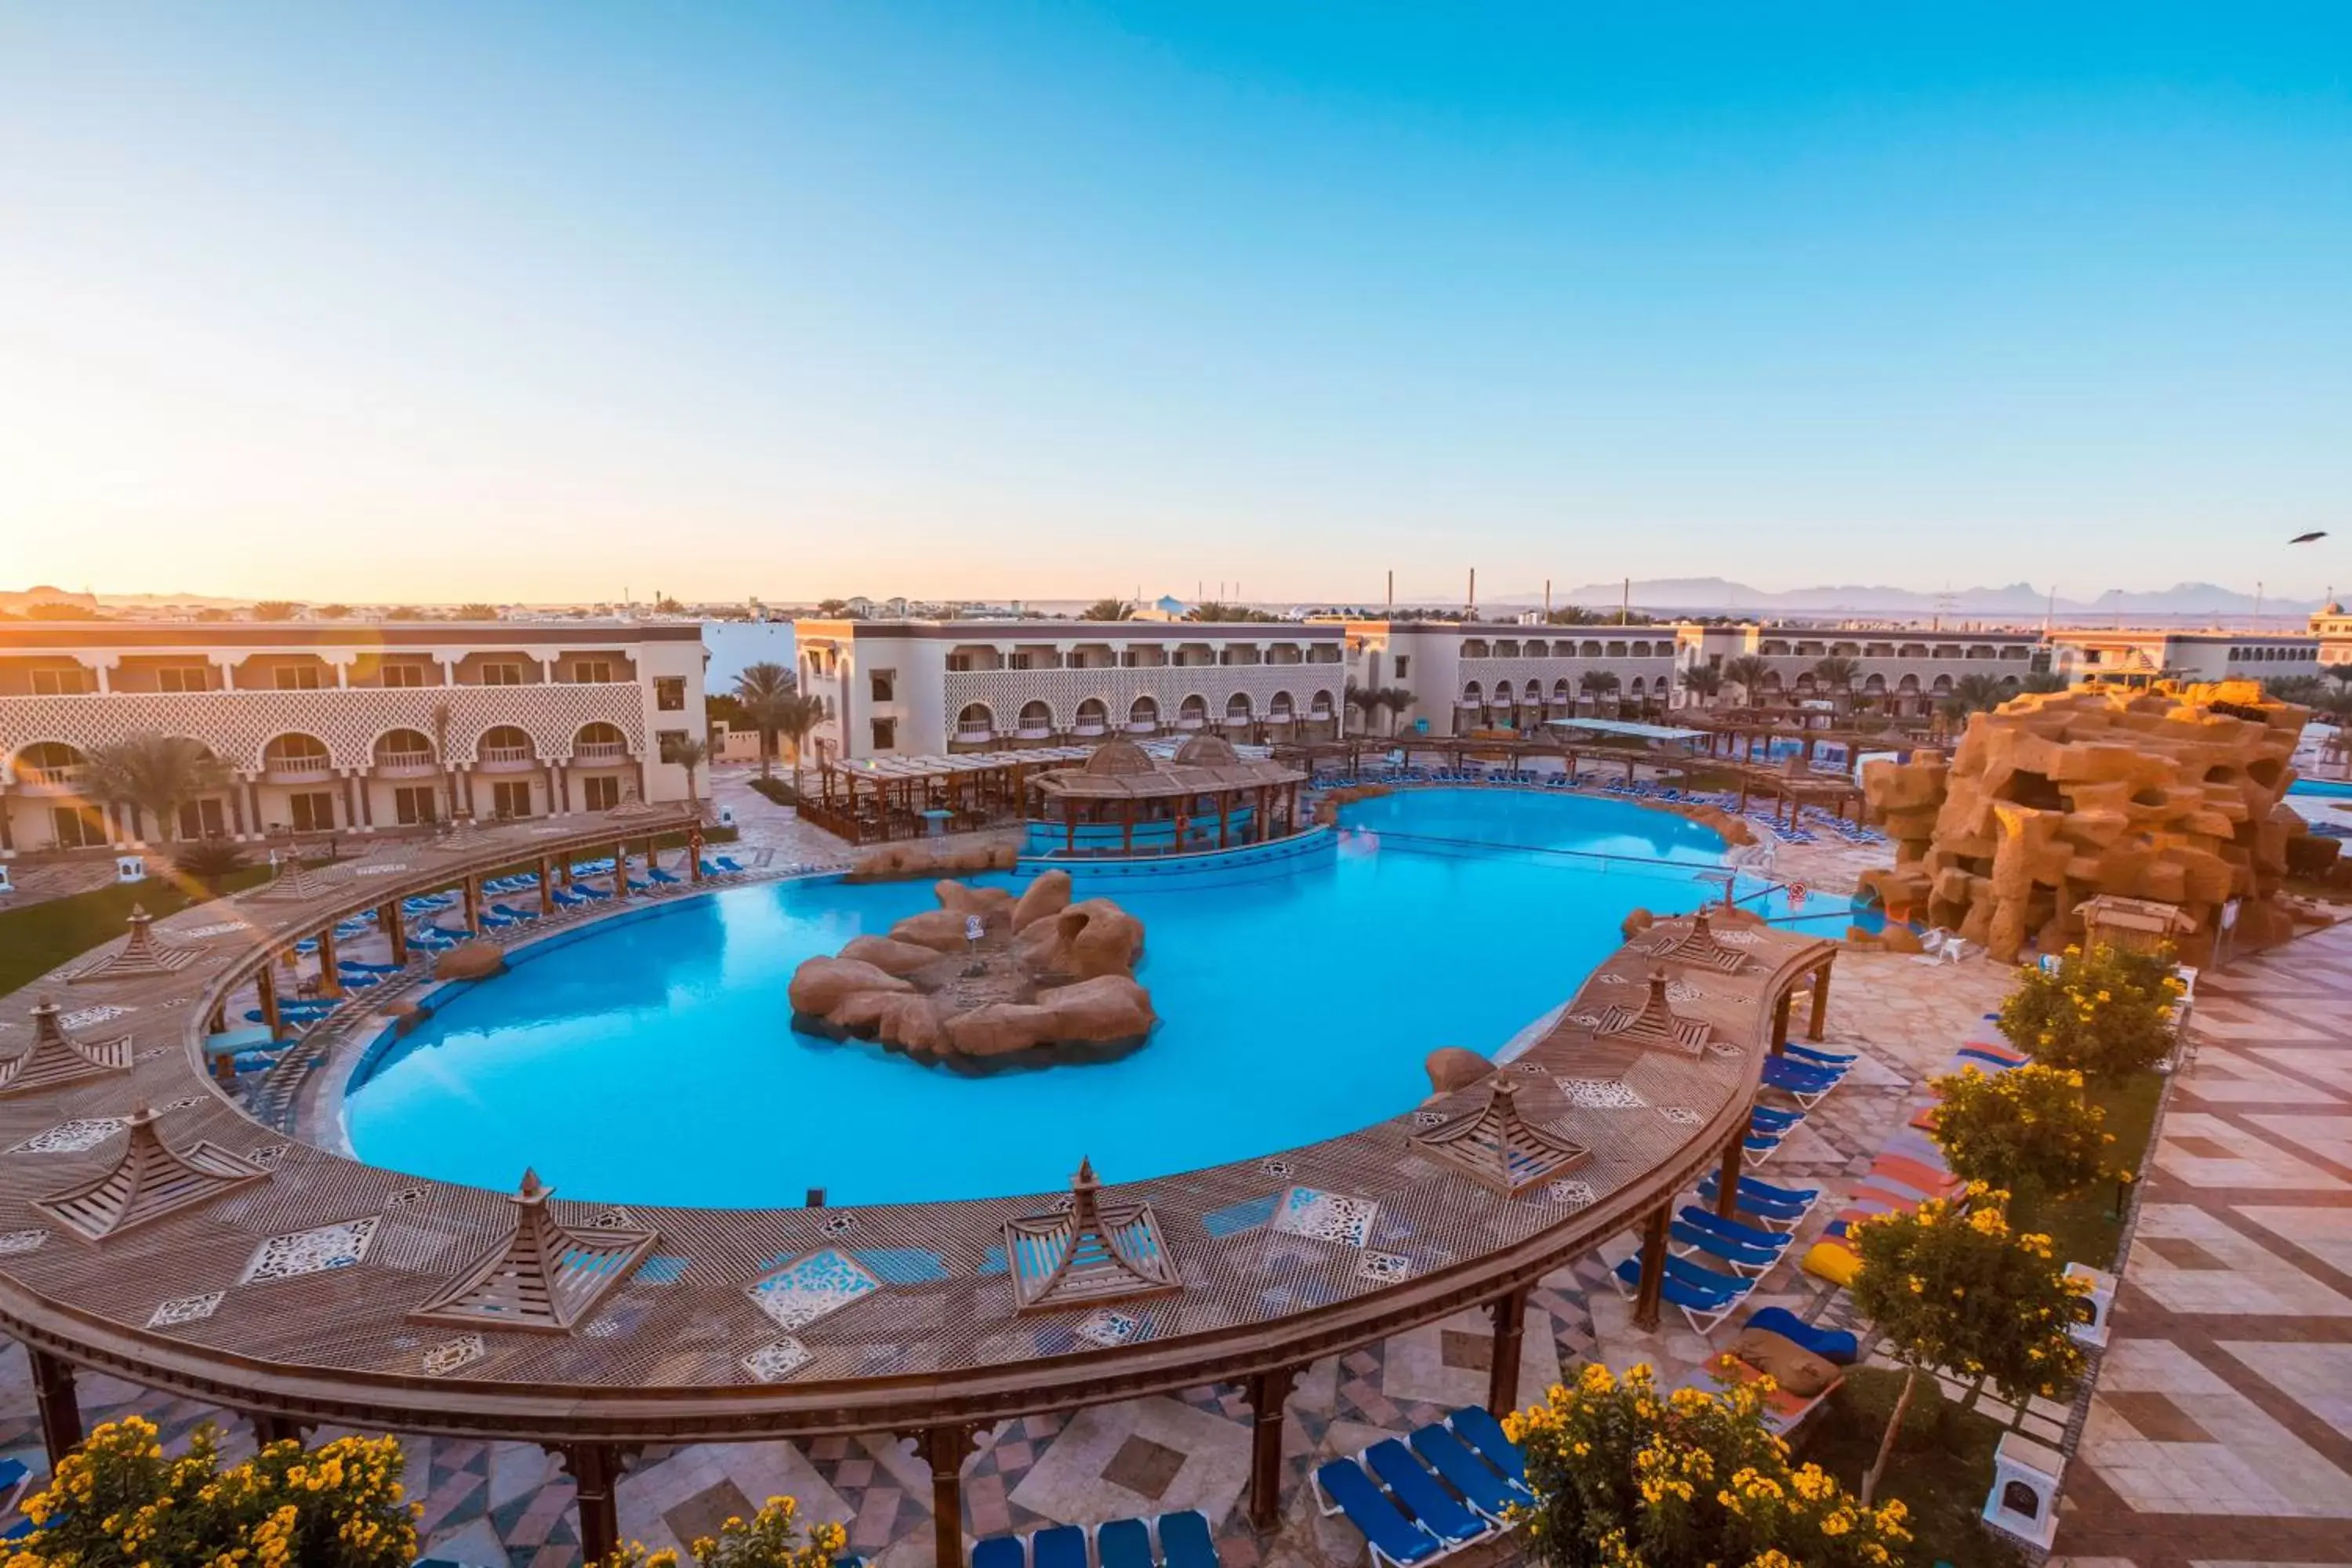 Pool View in Sunrise Mamlouk Palace Resort